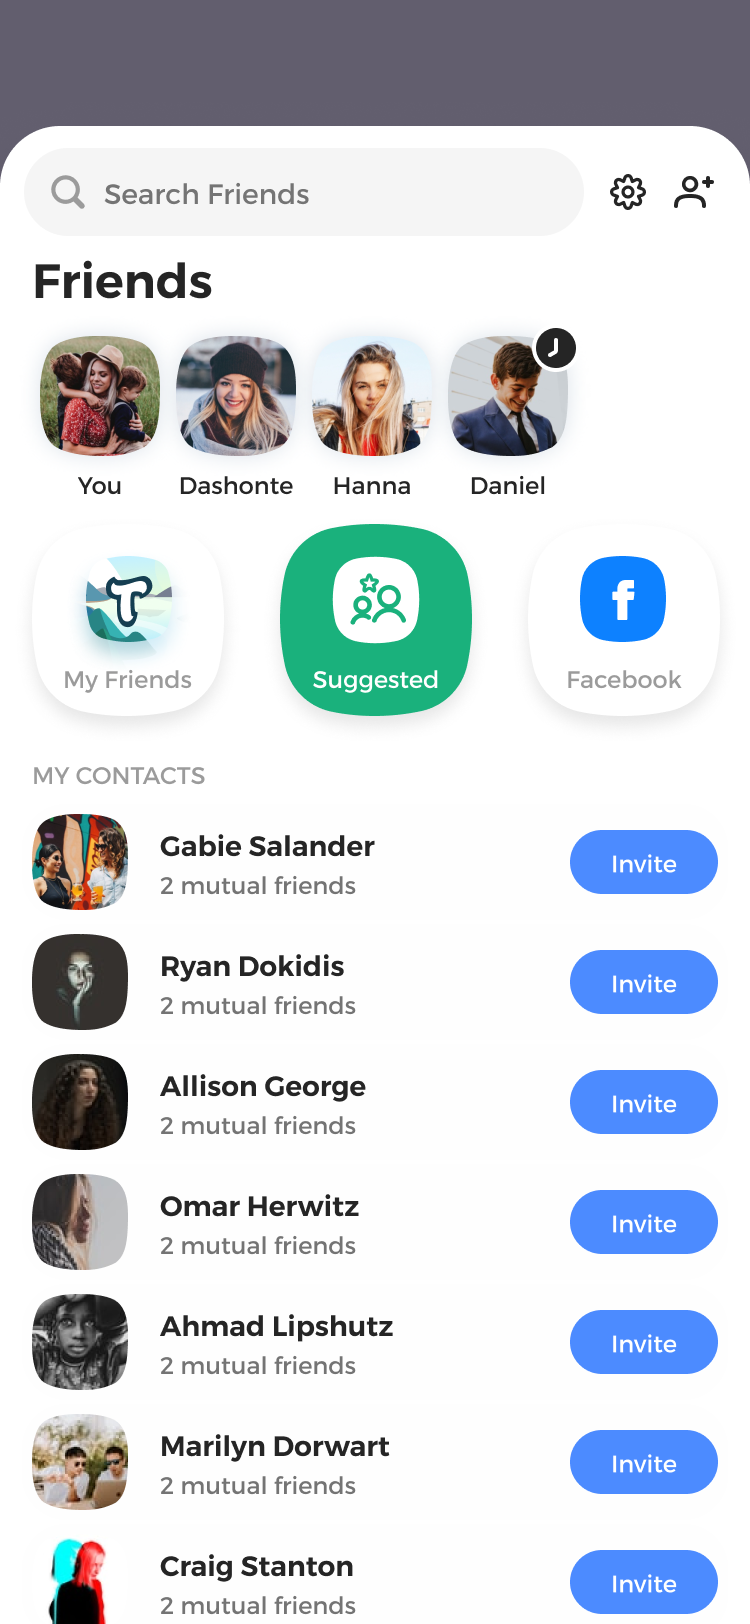 Adding new friends in the True app